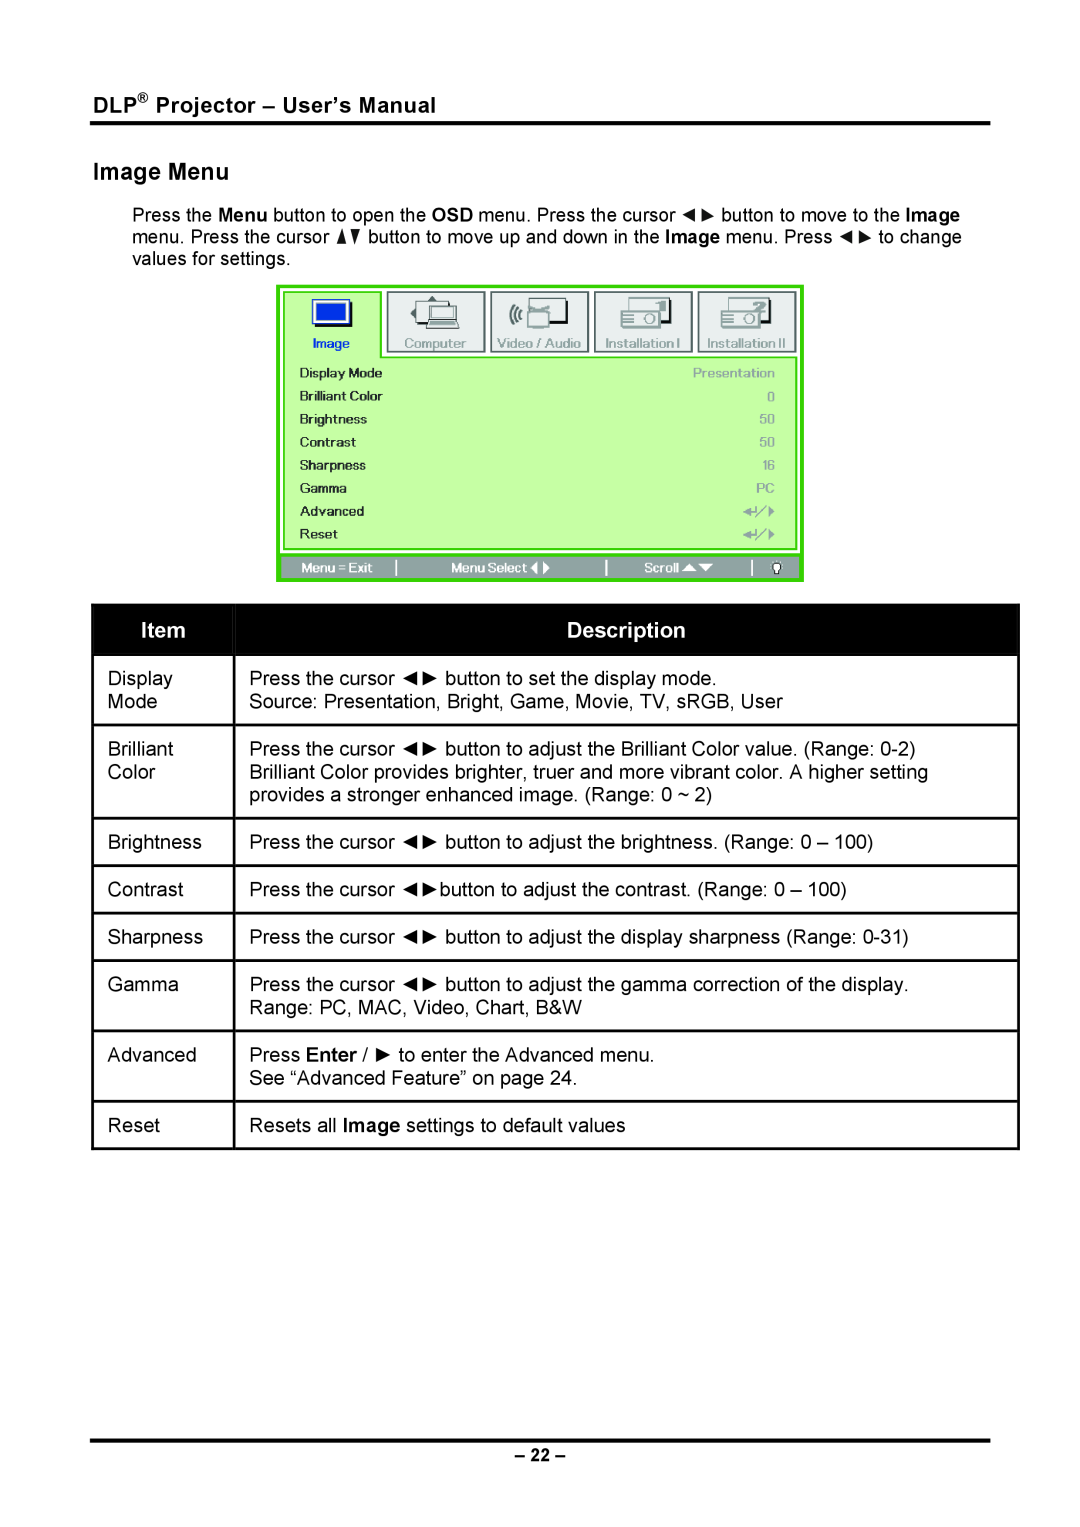 Planar PR5030 manual Image Menu, DLP Projector - User’s Manual 